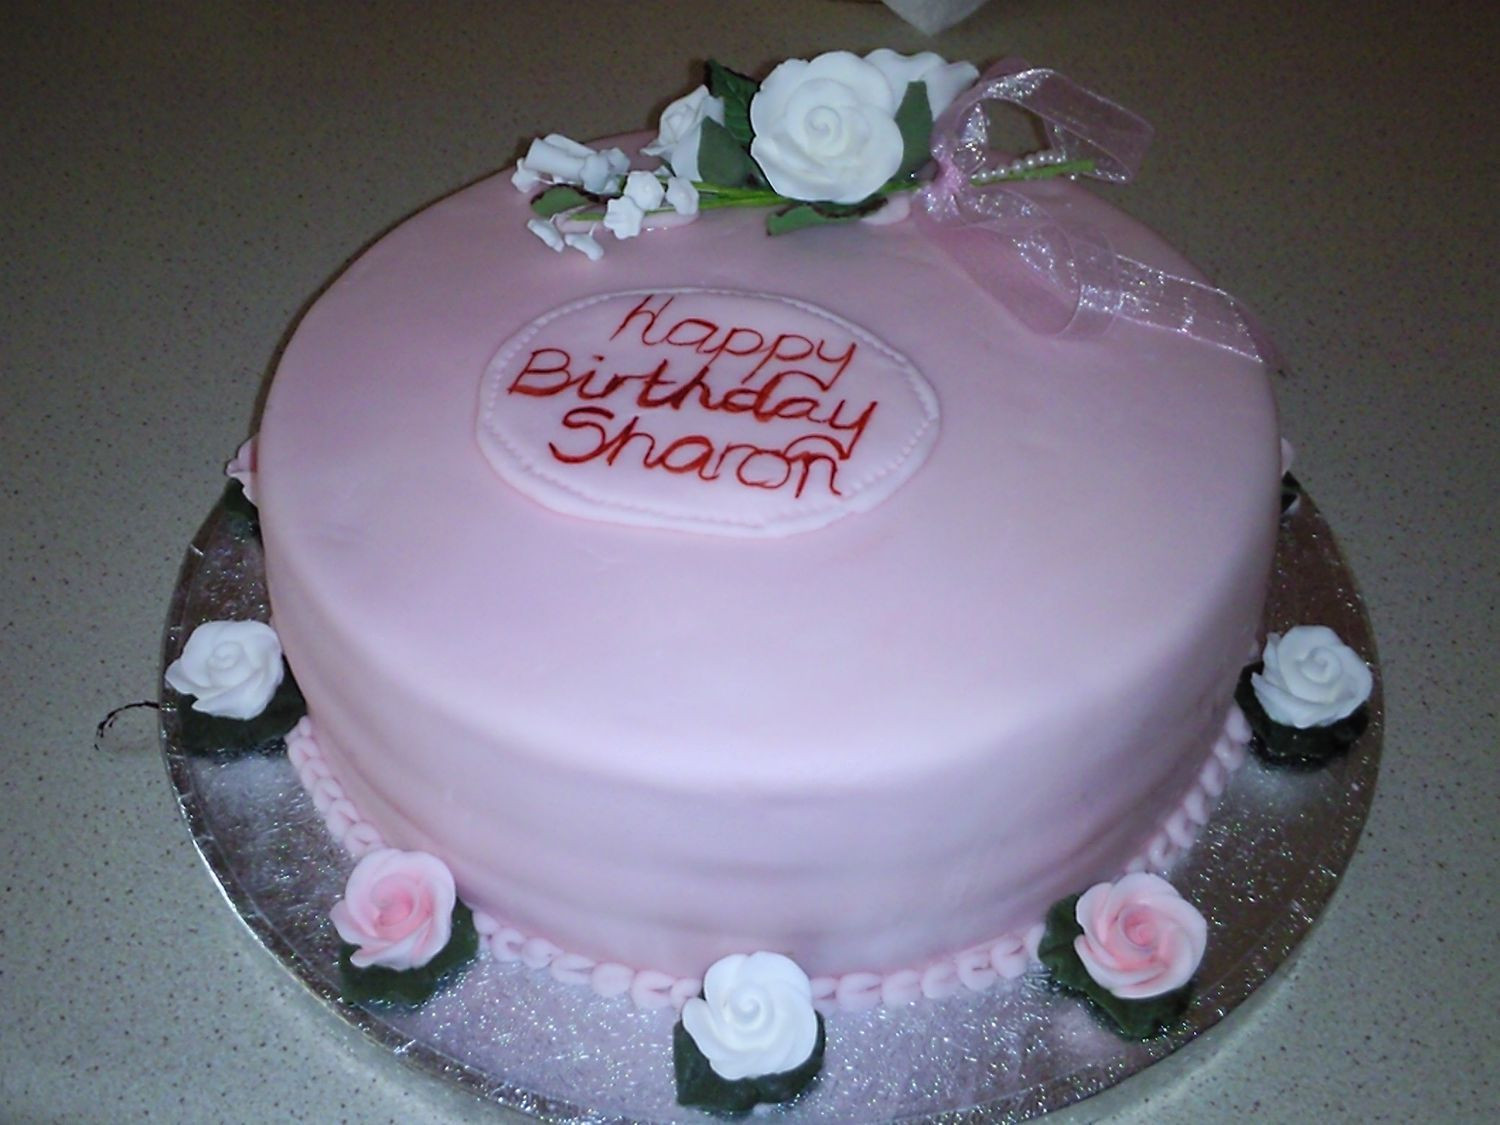 Best ideas about Happy Birthday Sharon Cake
. Save or Pin birthday cake sharon sharons birthday Now.